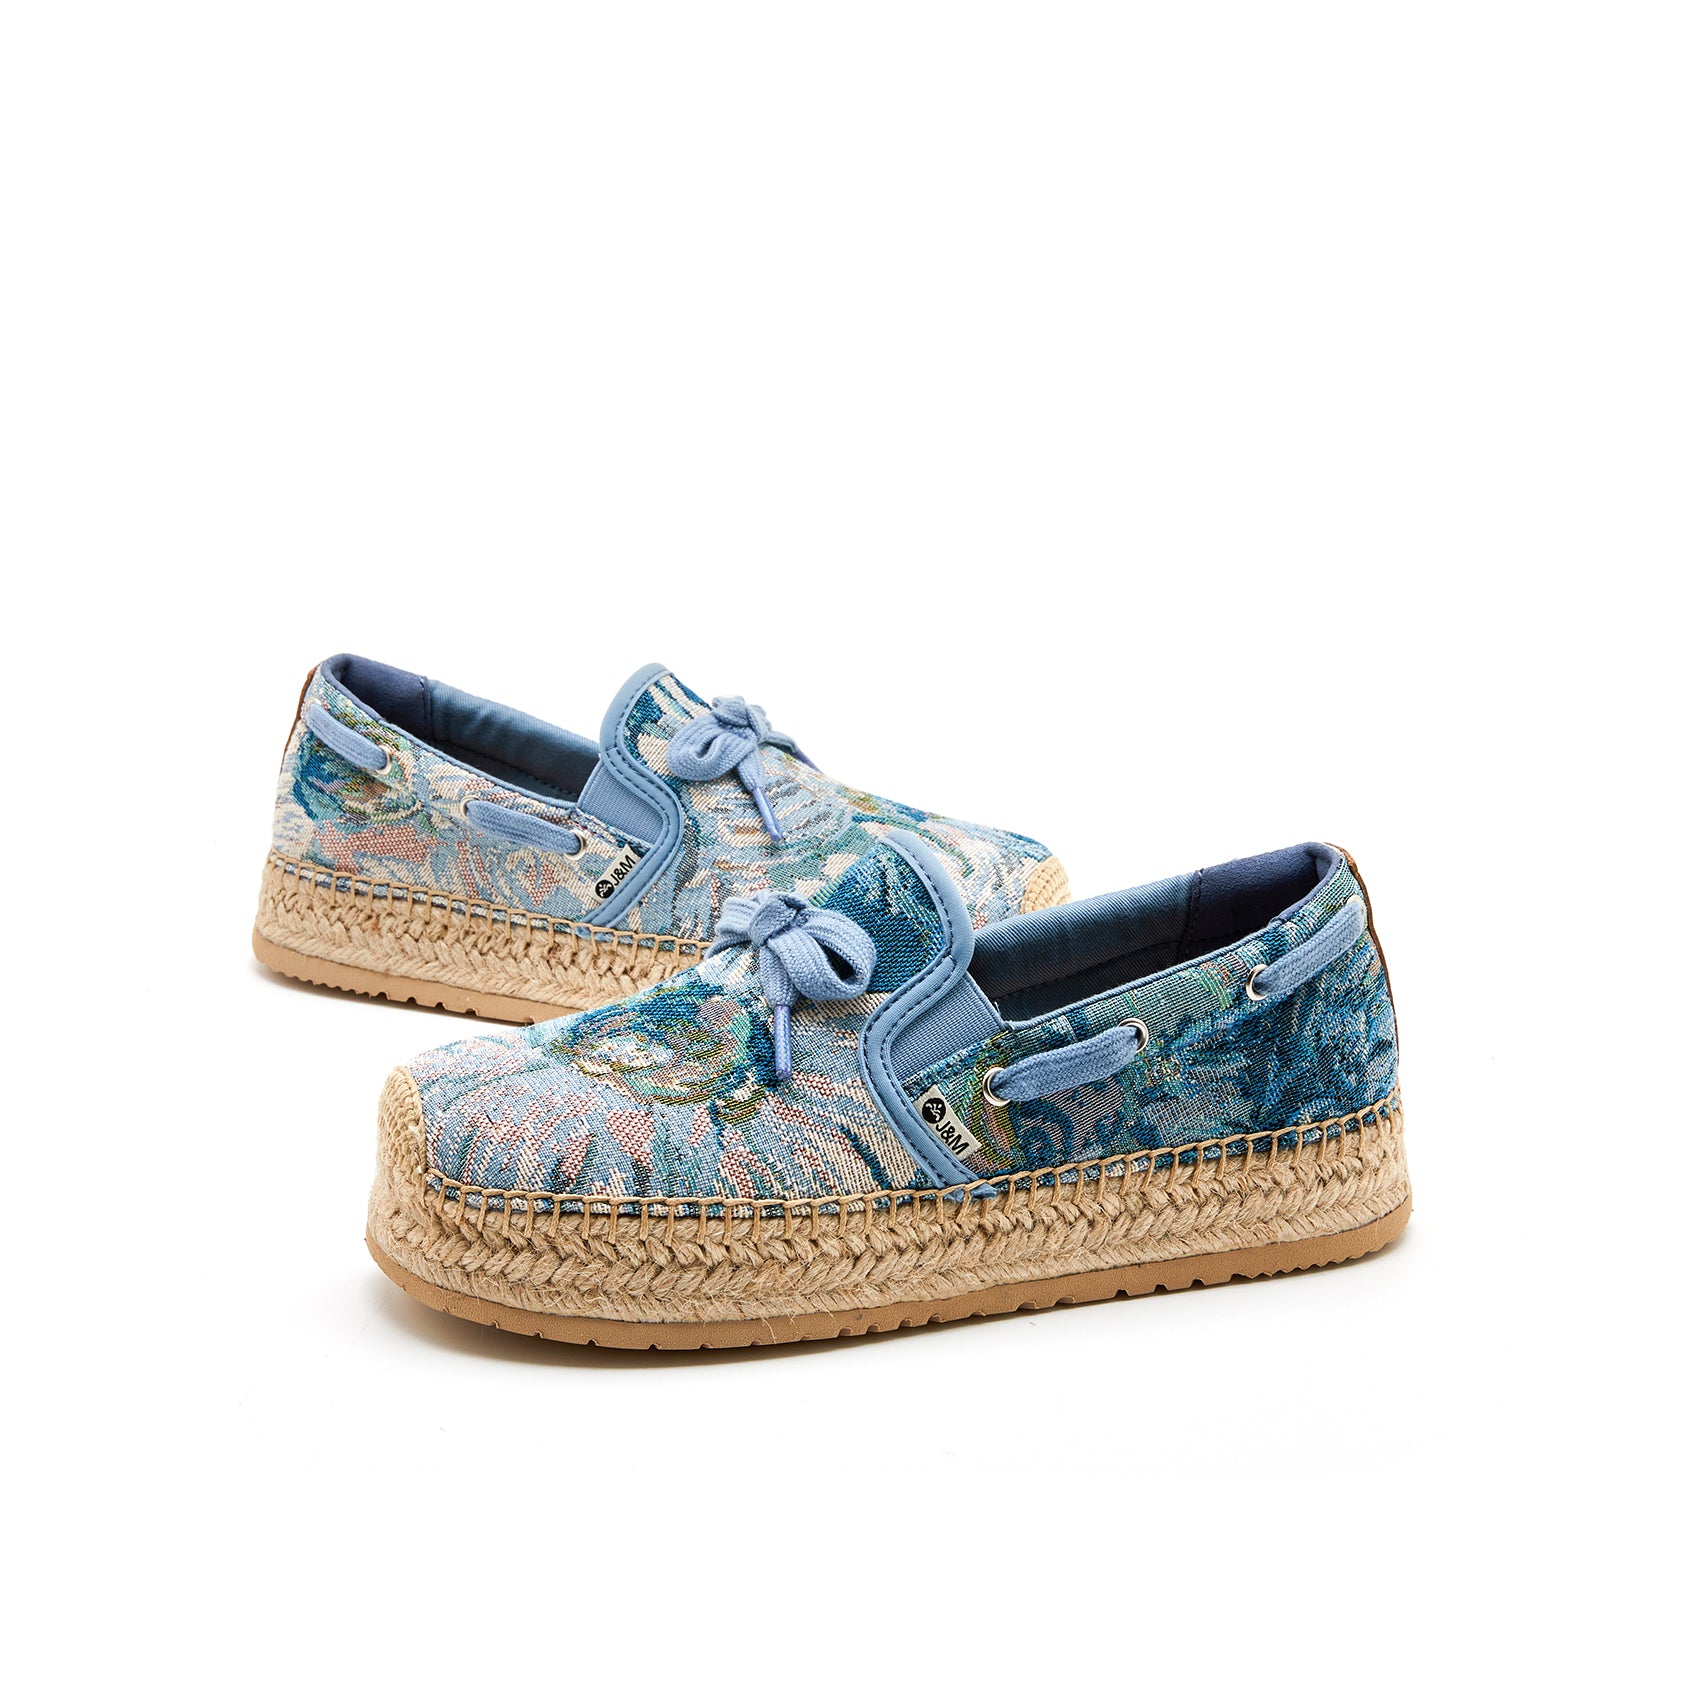 JOY&MARIO Handmade Women’s Slip-On Espadrille Fabric Loafers in Blue-05335W